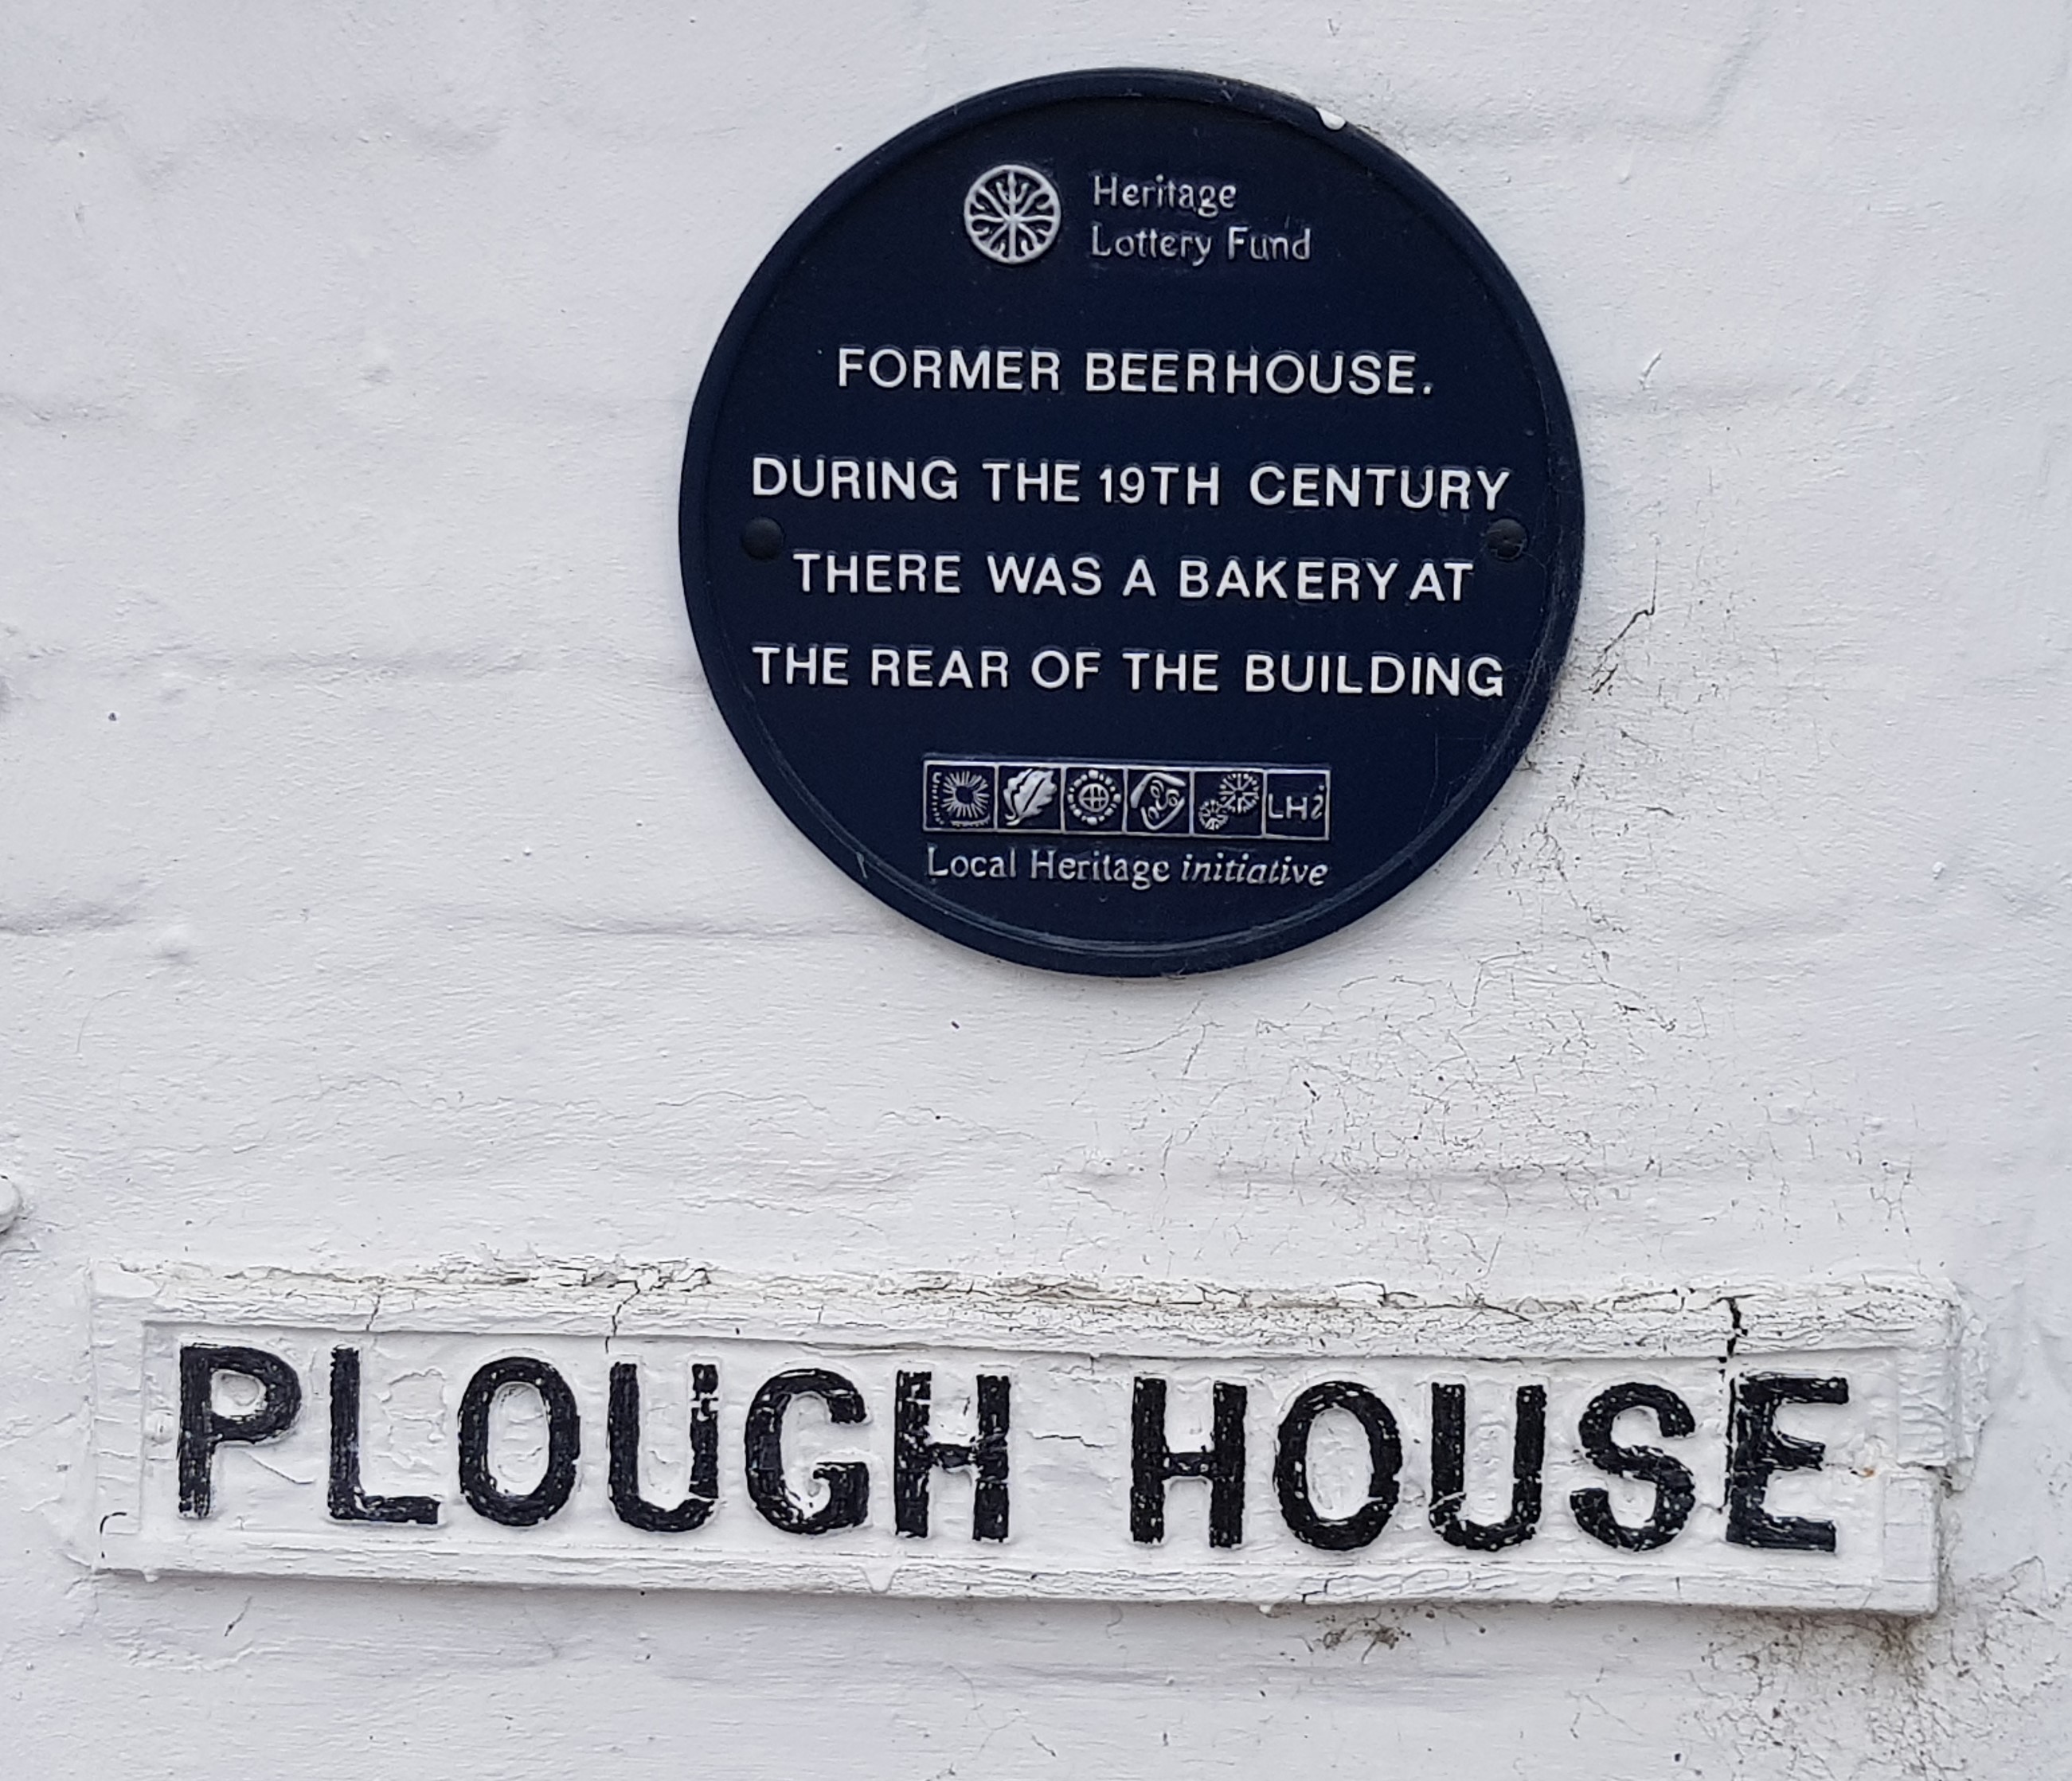 33-_Plough_Inn_plaque